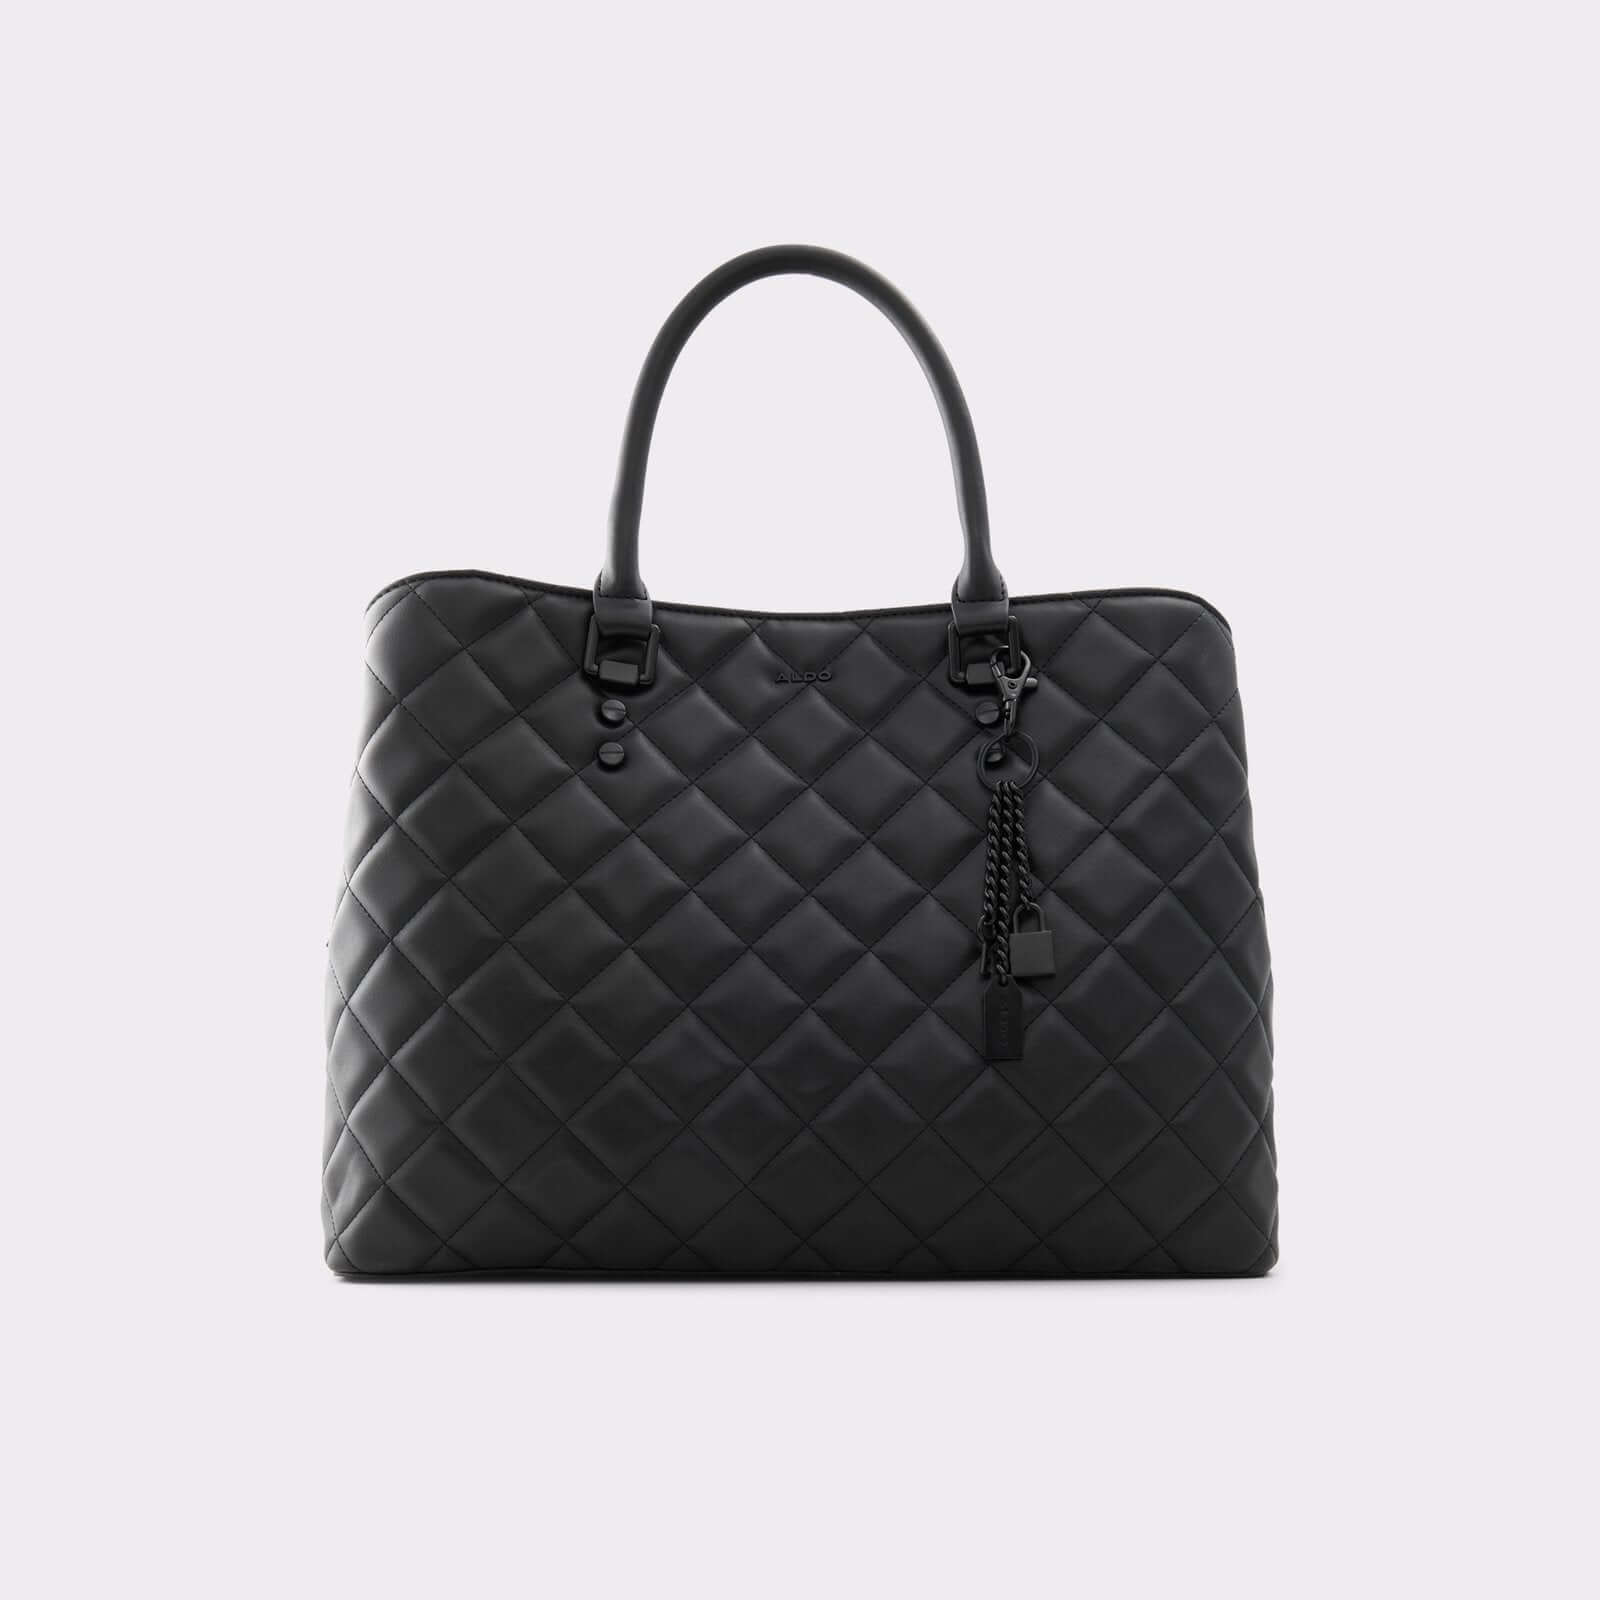 ALDO Women's Dreiddaa Tote Bag, Black/White : Clothing, Shoes & Jewelry -  Amazon.com